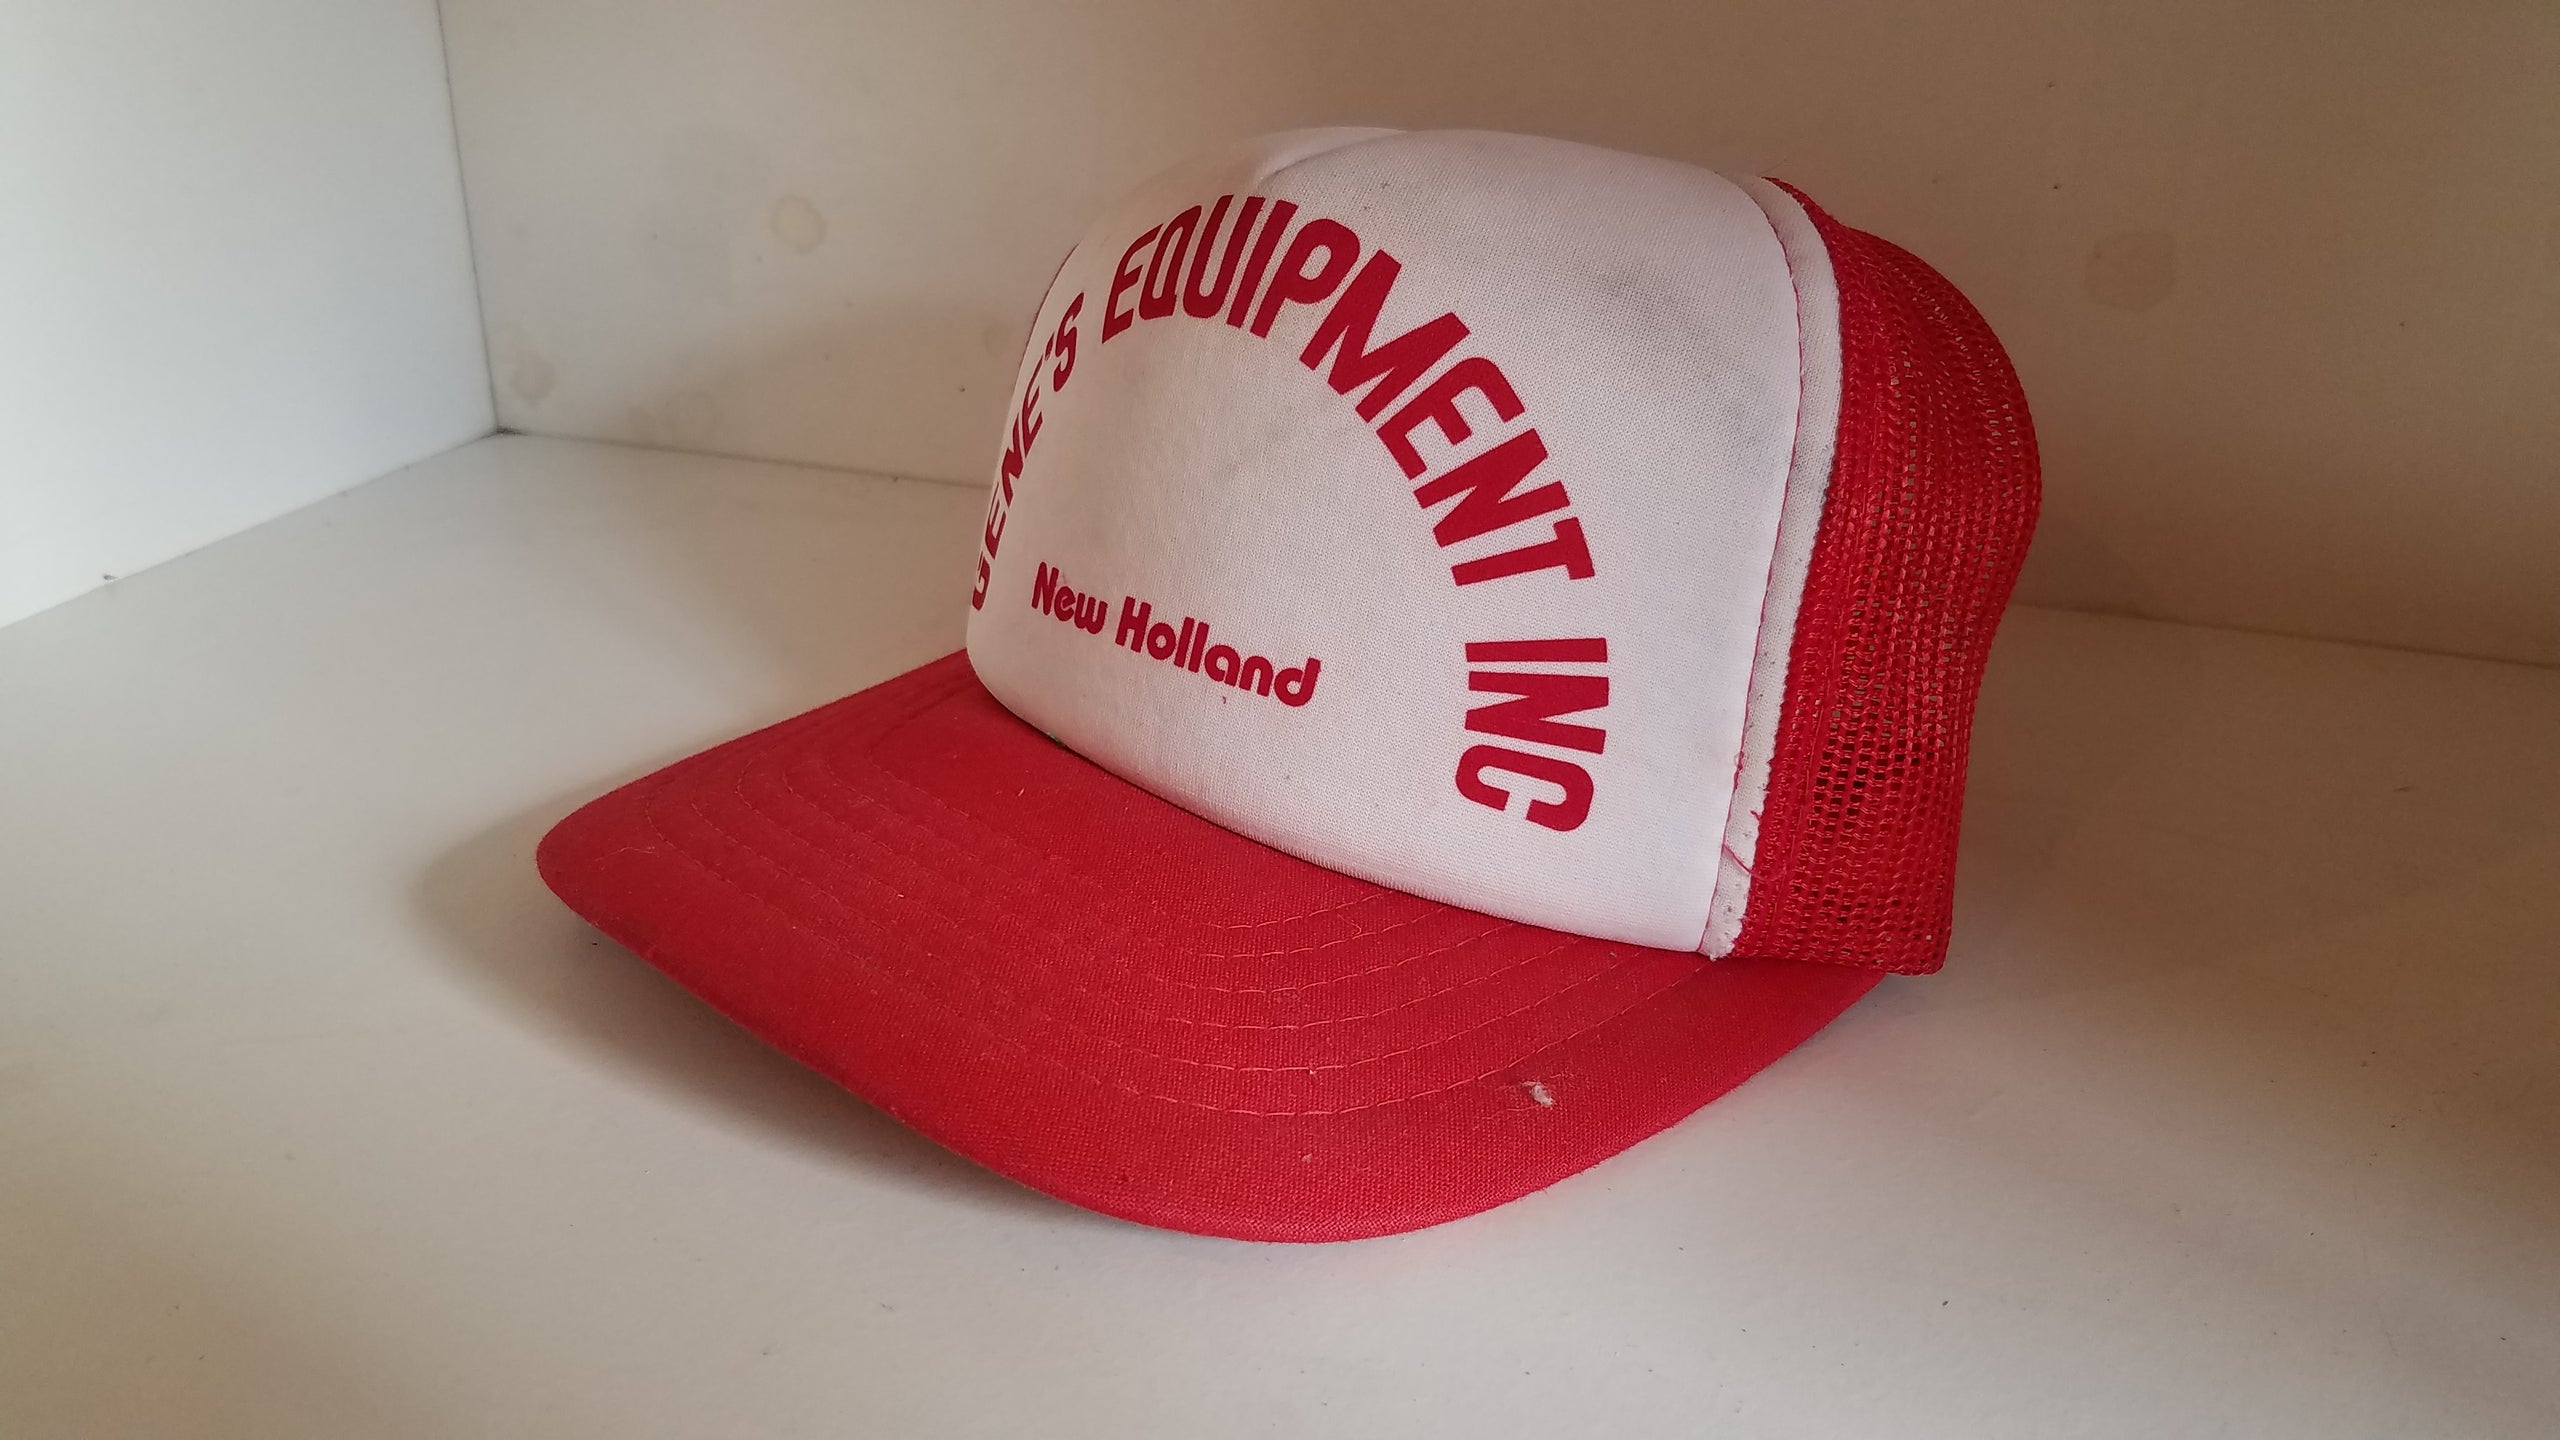 Vintage Gene's Equipment Inc. New Holland Snapback Trucker Hat